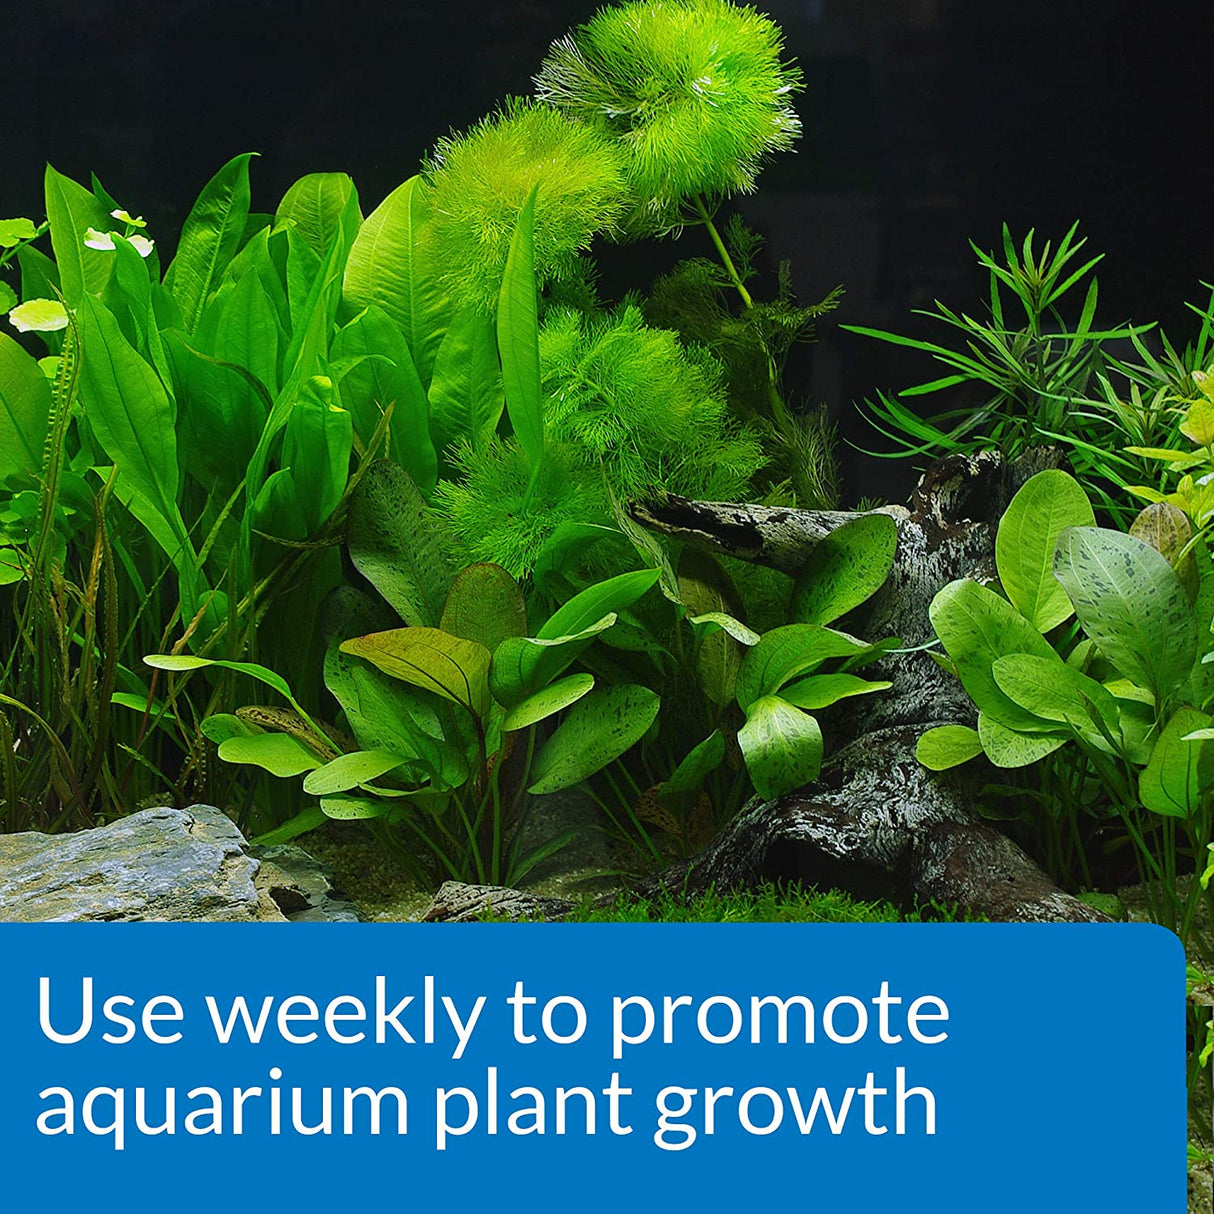 36 oz (4 x 9 oz) API Leaf Zone Promotes Aquarium Plant Growth